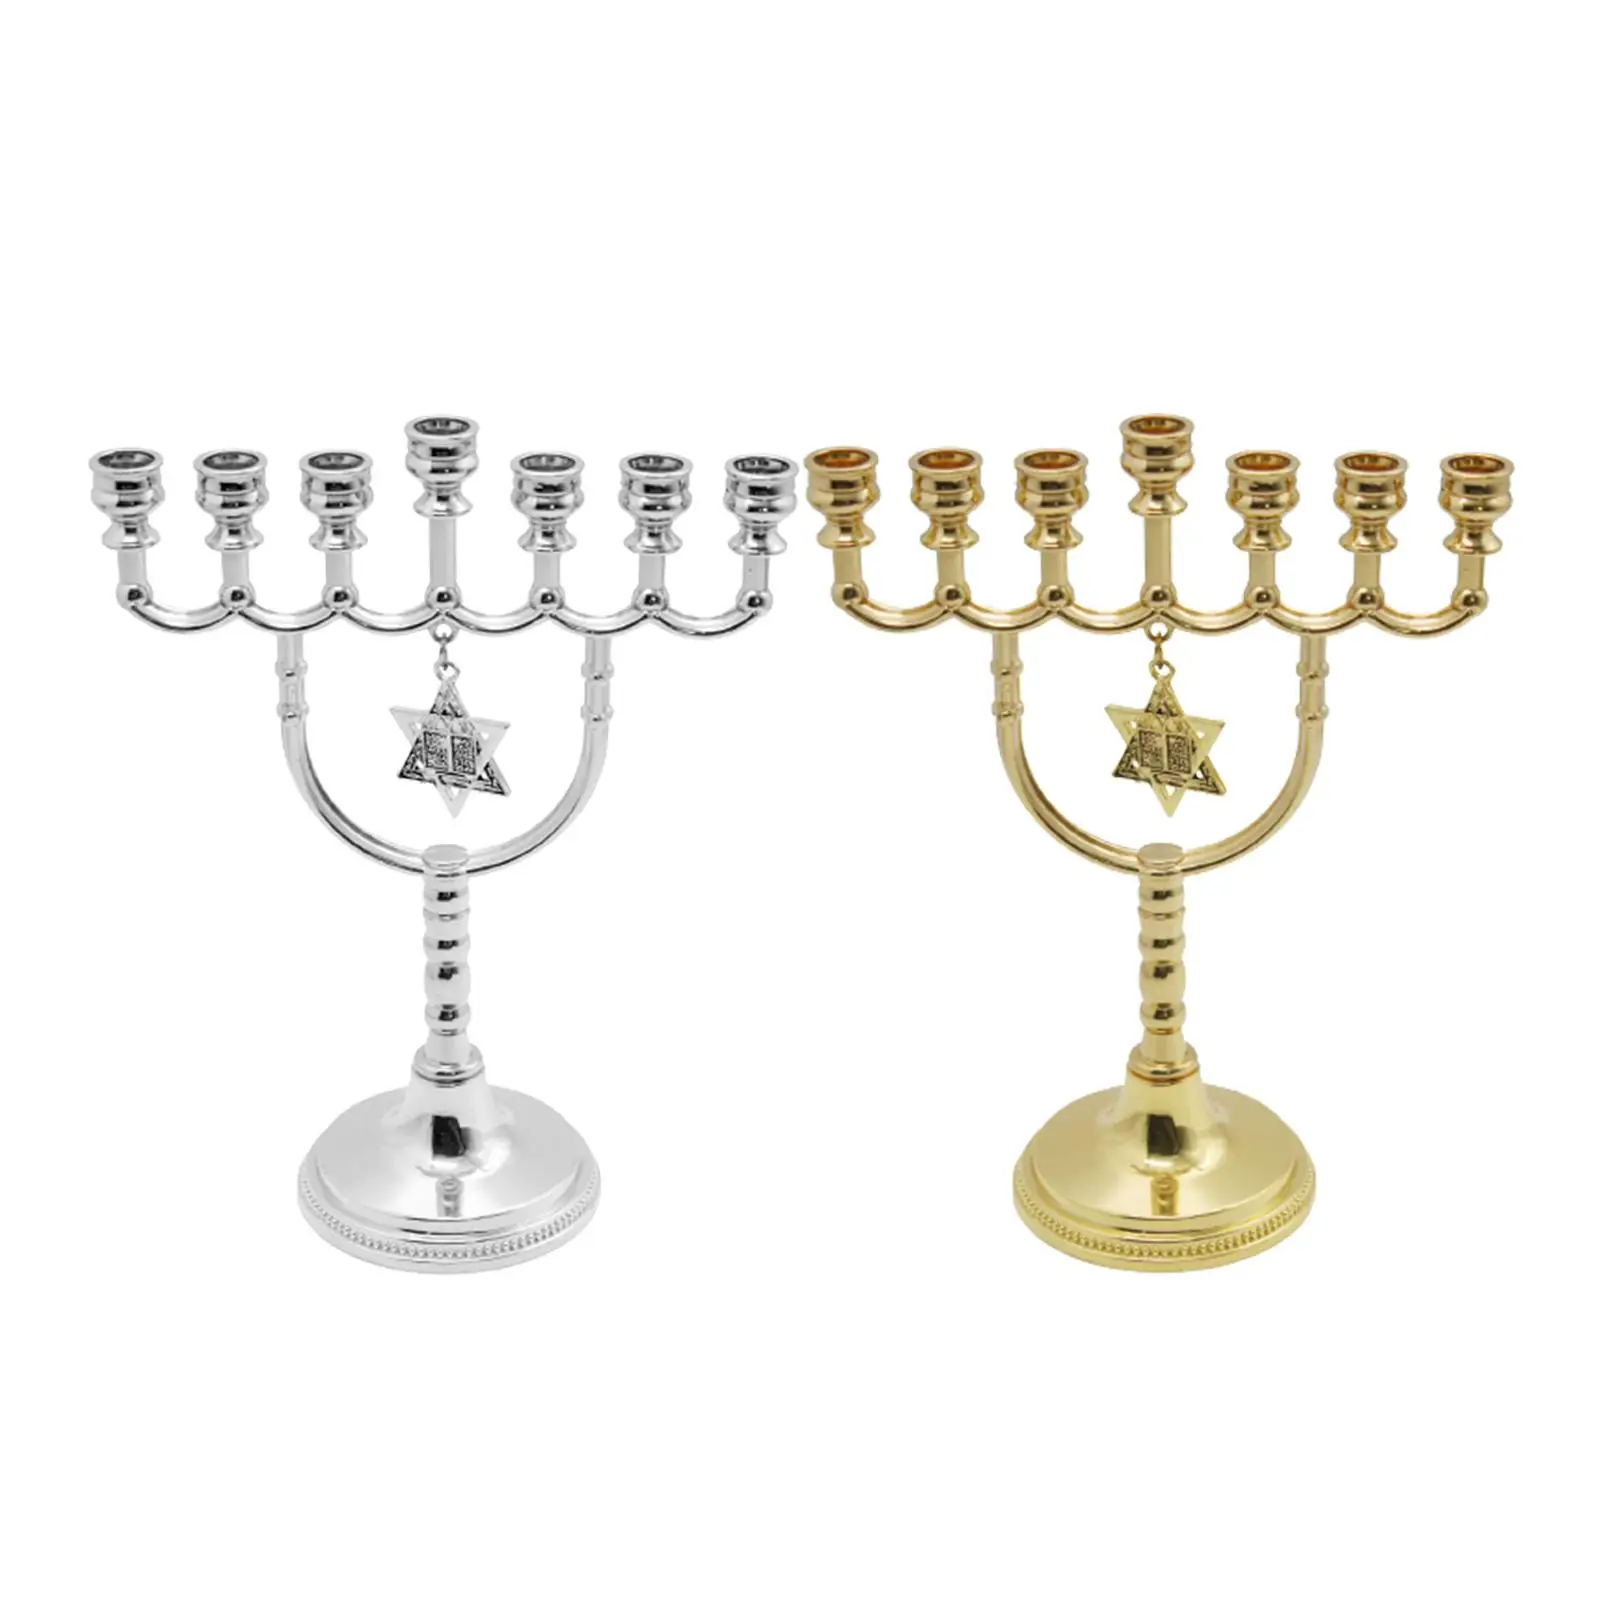 Candle Holder Decorative Menorahs Traditional Candle Stand Hanukkah Menorah